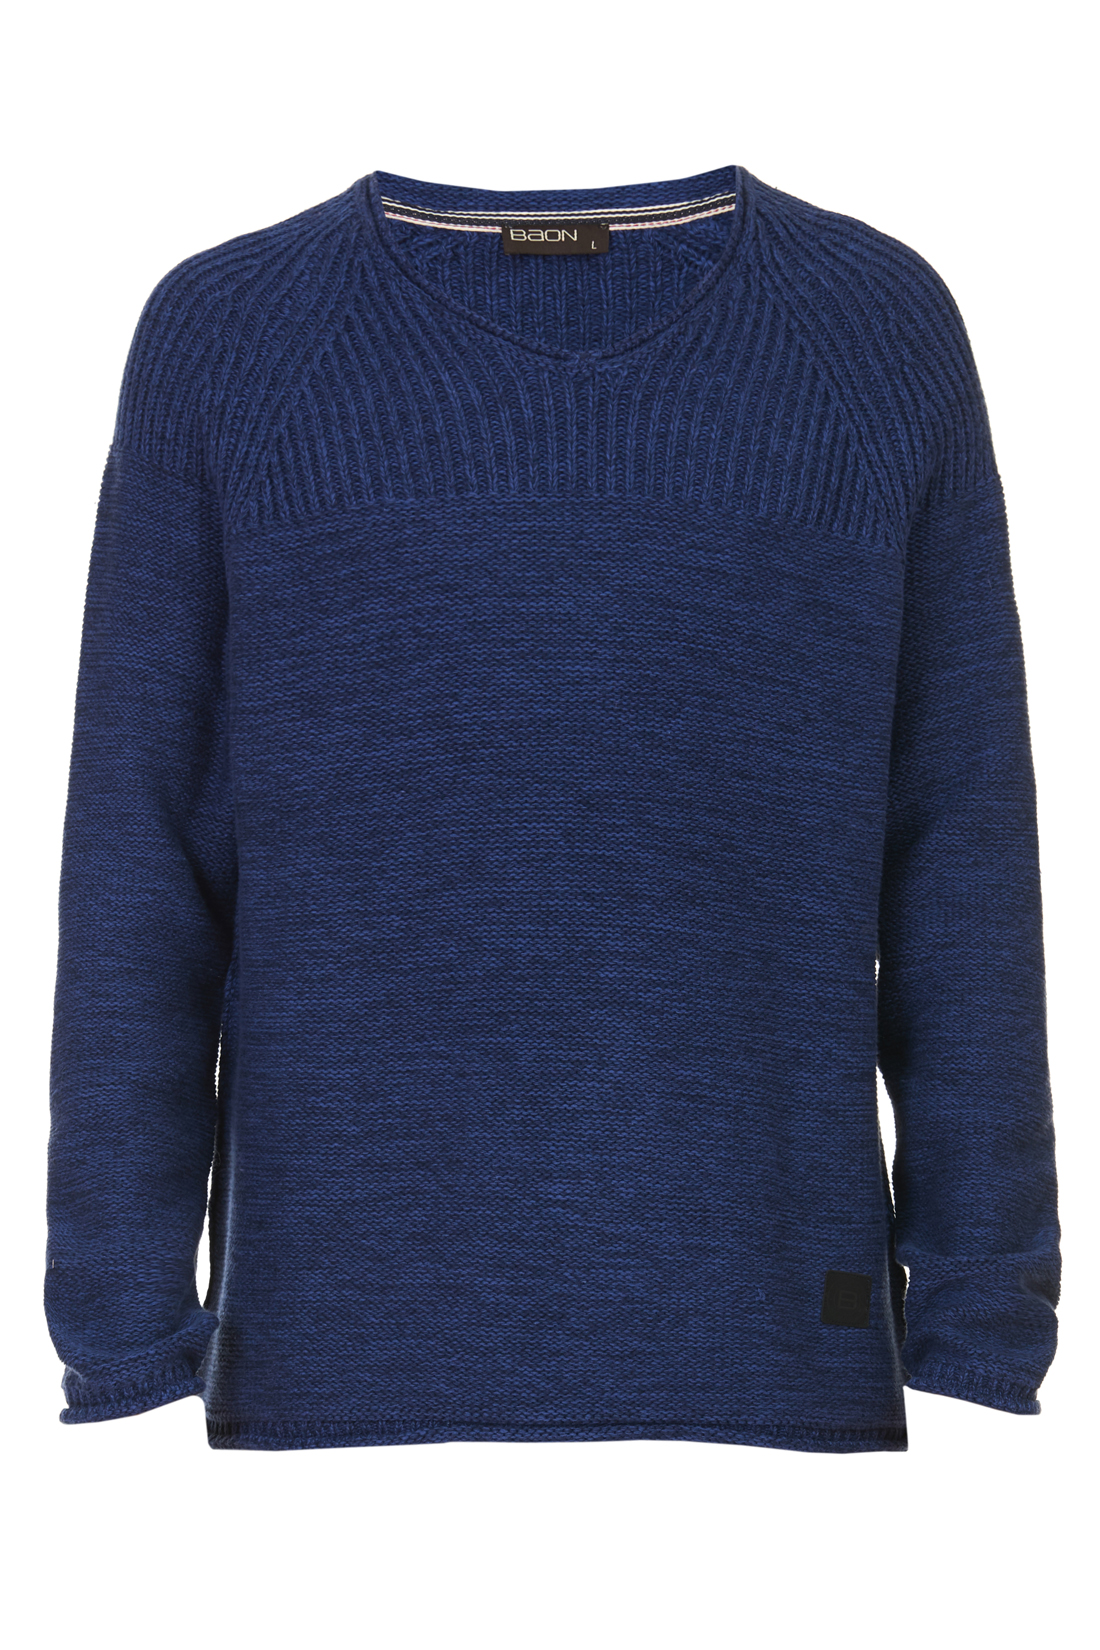 Пуловер из хлопка (арт. baon B637520), размер XXL, цвет deep navy melange#синий Пуловер из хлопка (арт. baon B637520) - фото 3